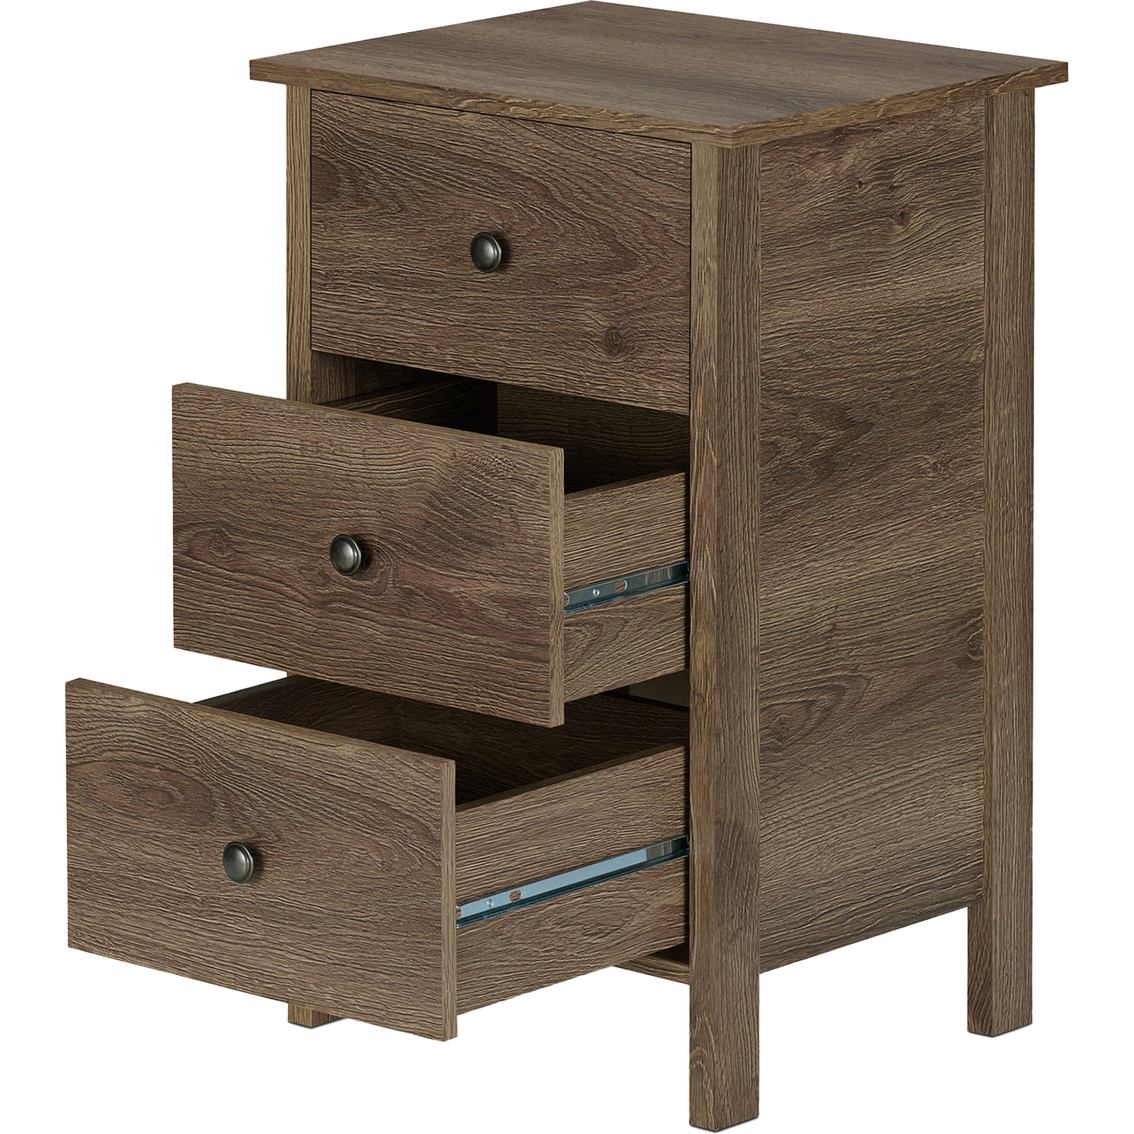 Furniture of America Daena Wood 3 Drawer Nightstand - Image 2 of 3